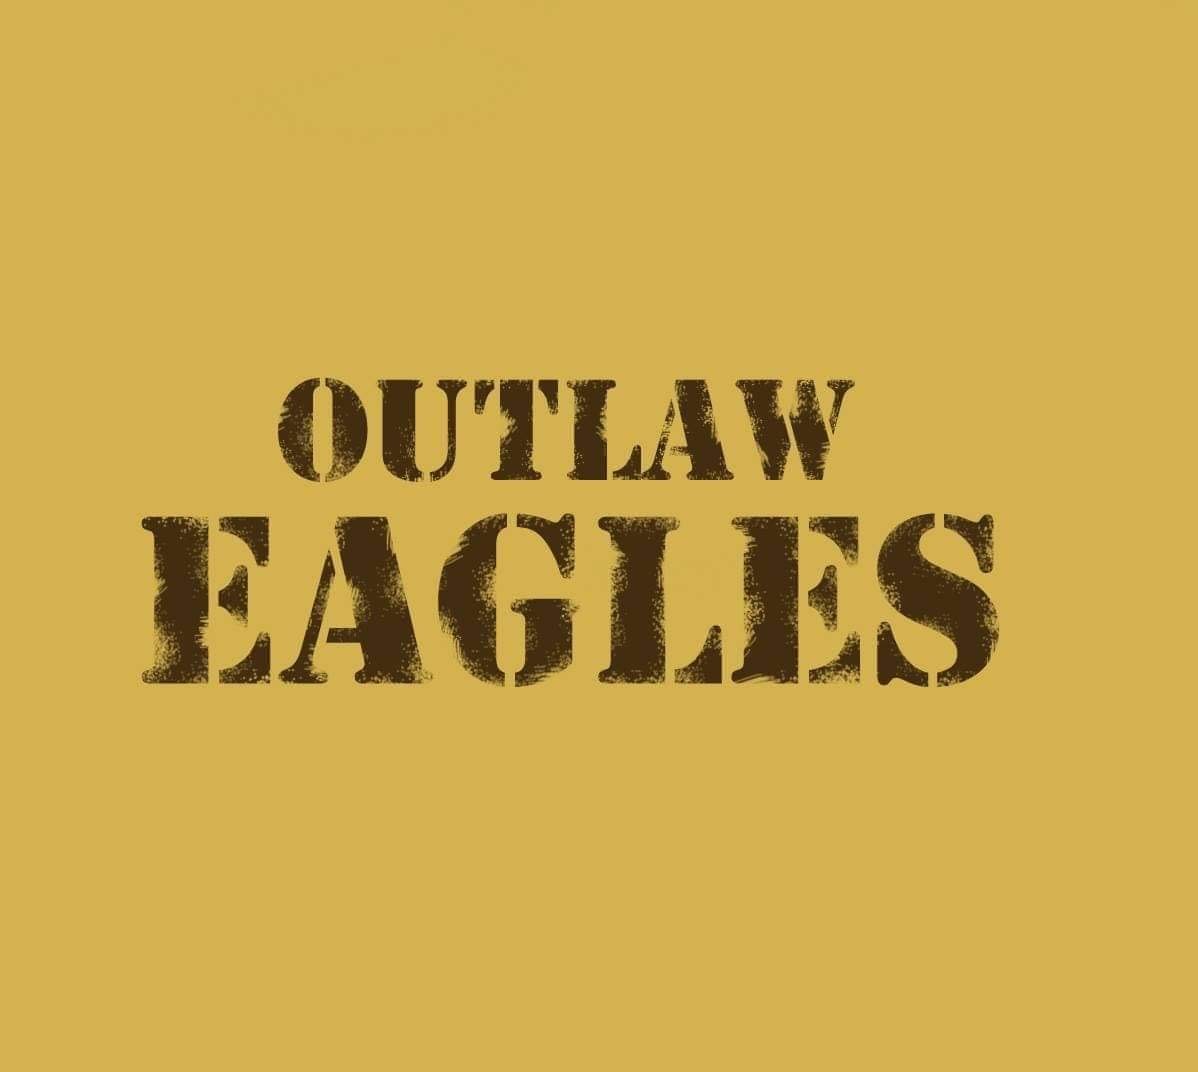 Outlaw Eagles  on jun. 17, 19:30@Wisbech St.Mary Community Centre - Compra entradas y obtén información enwhittlesey music nights 